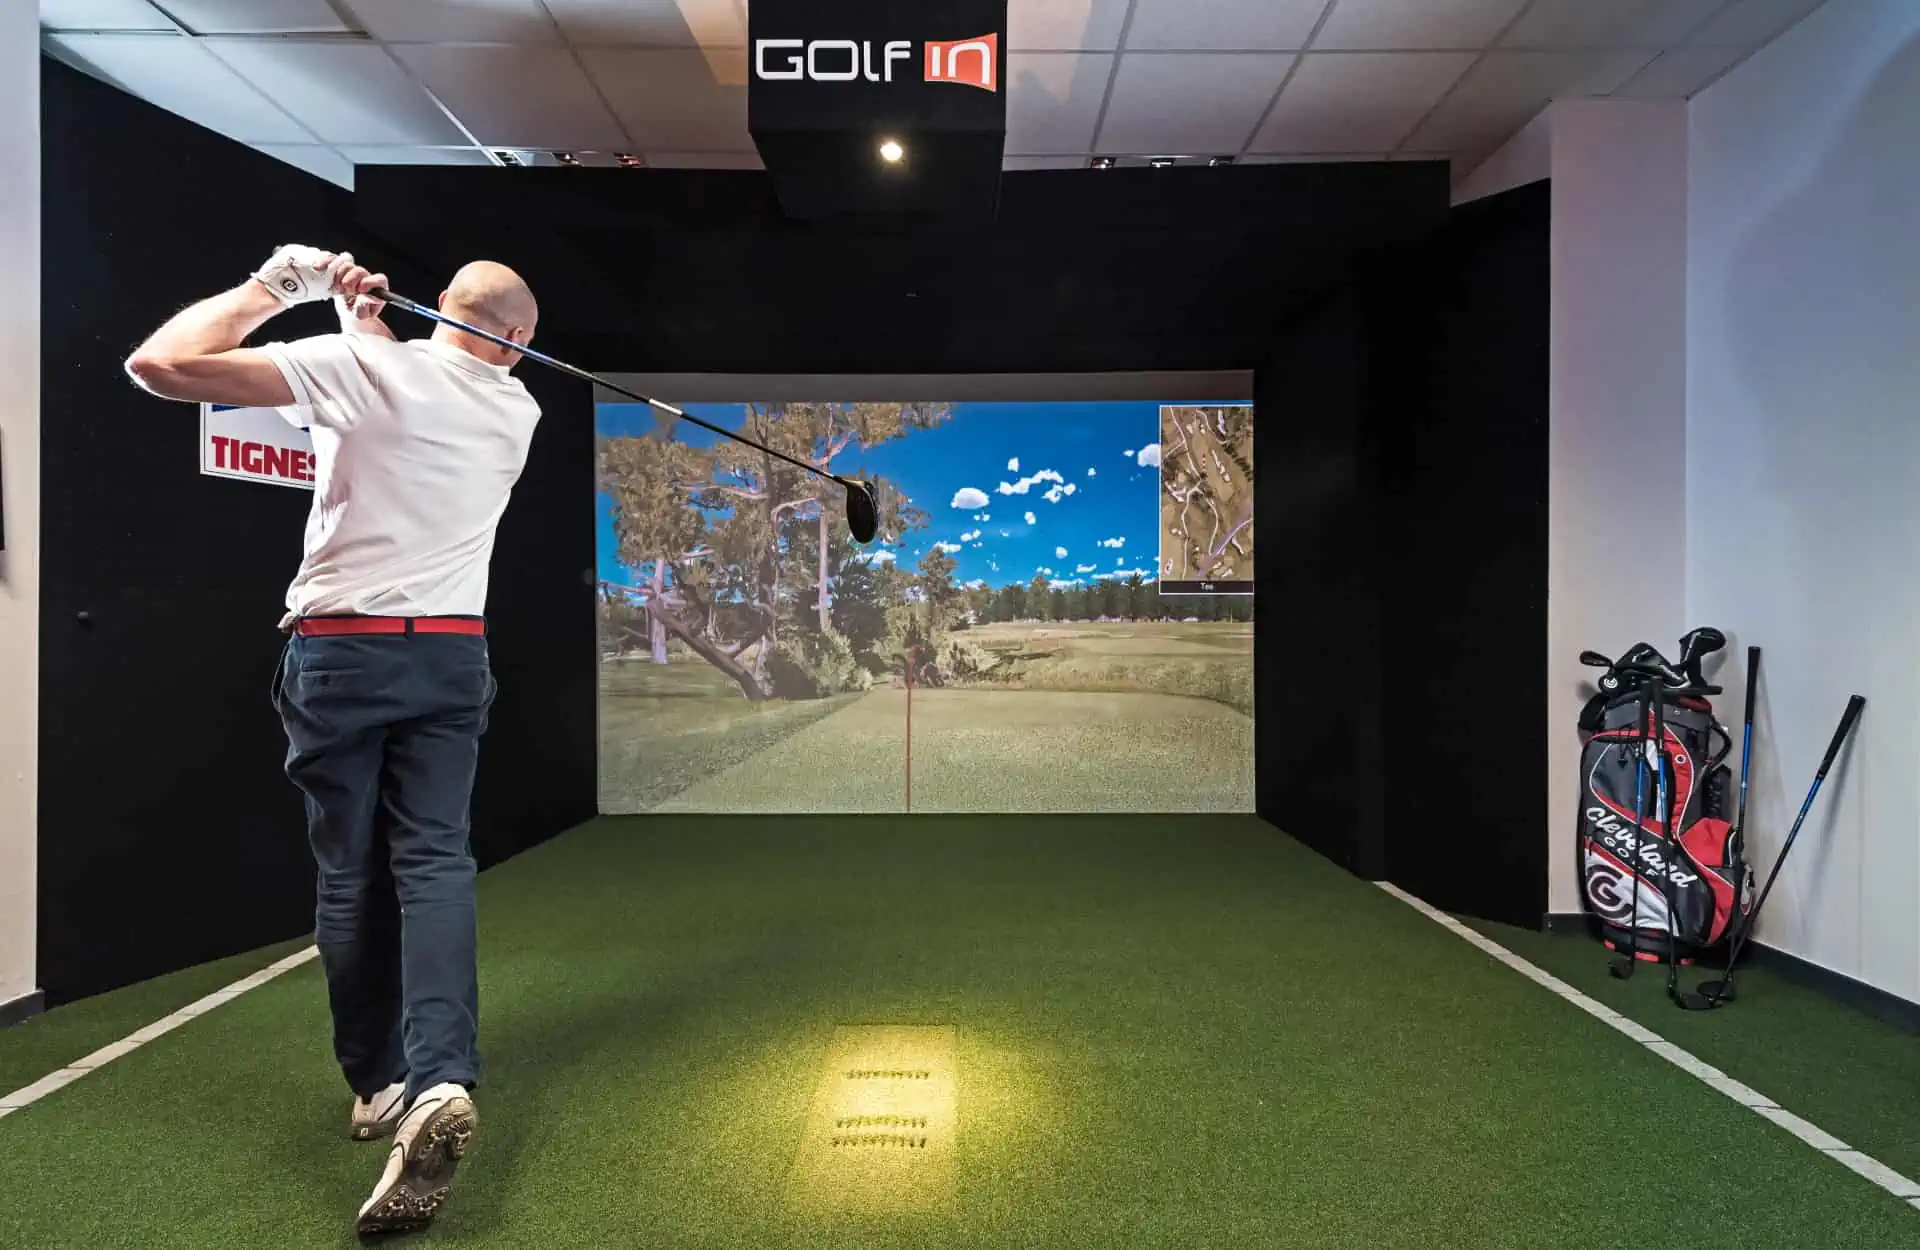 Golf simulator in Tignes - Greg Mistral